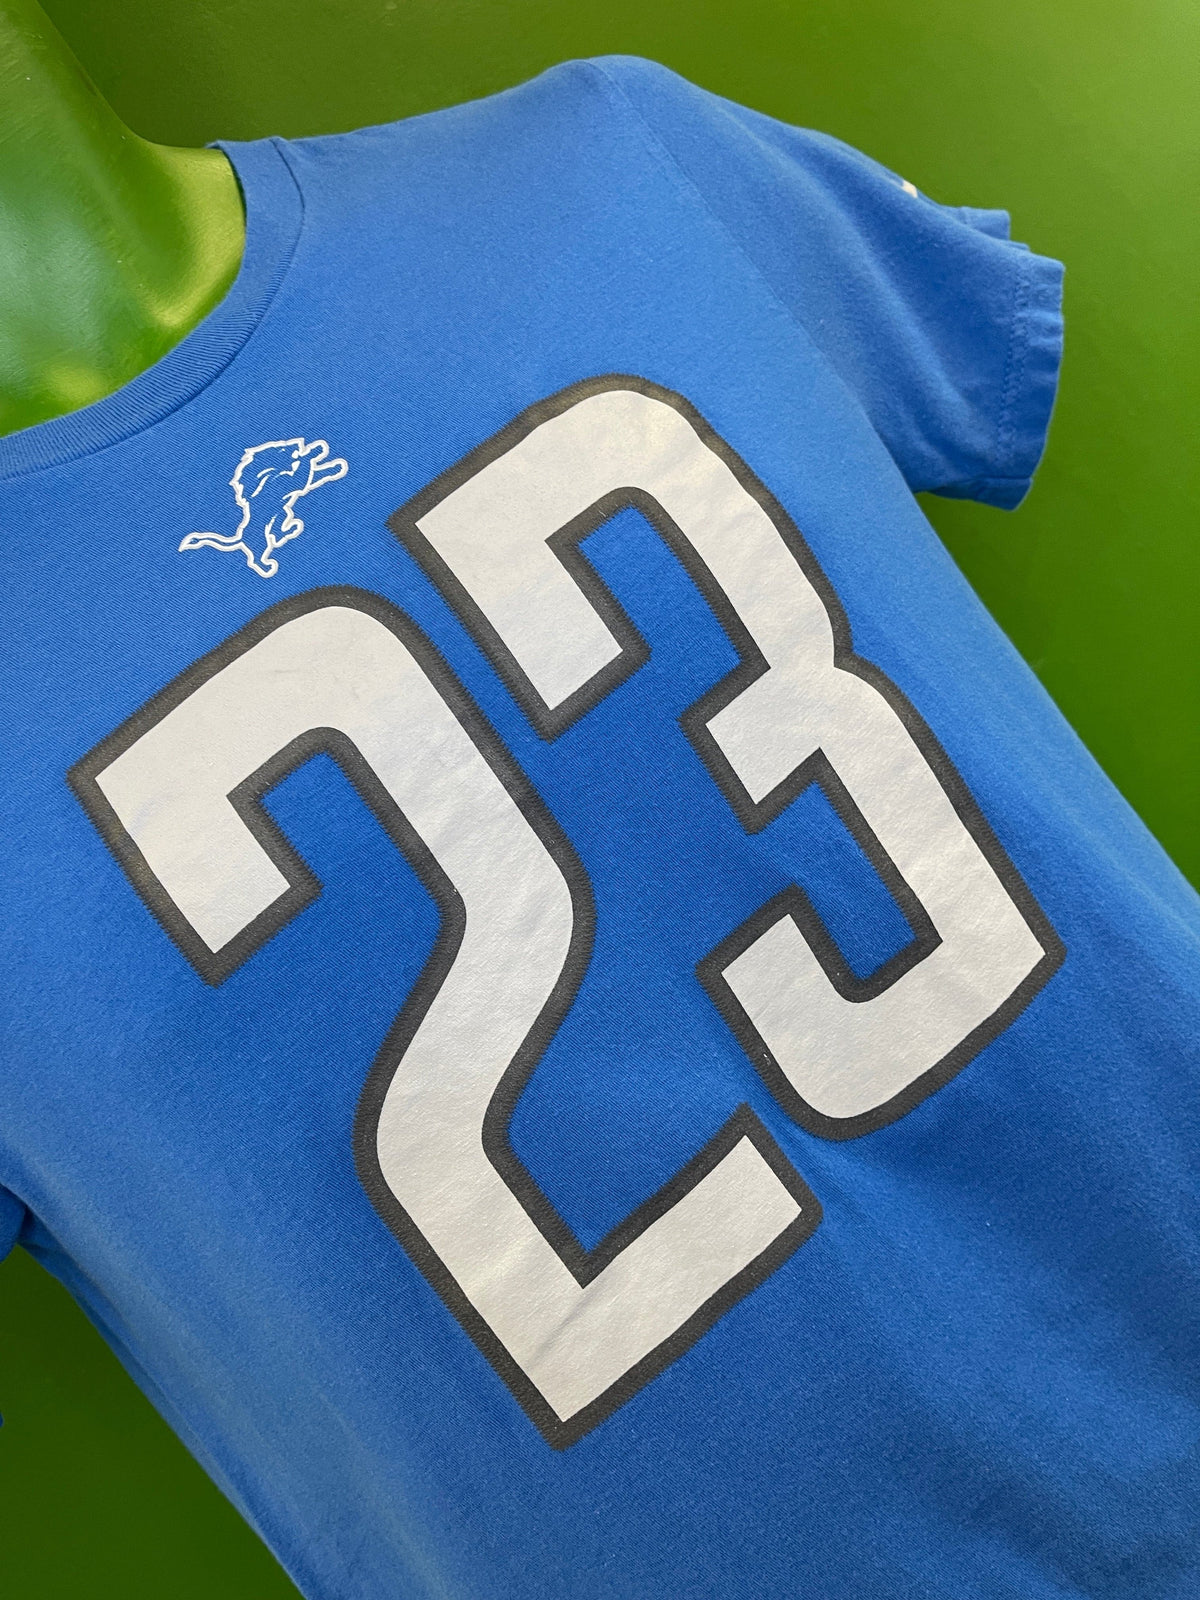 NFL Detroit Lions Darius Slay #23 T-Shirt Youth Girls' Large 14-16